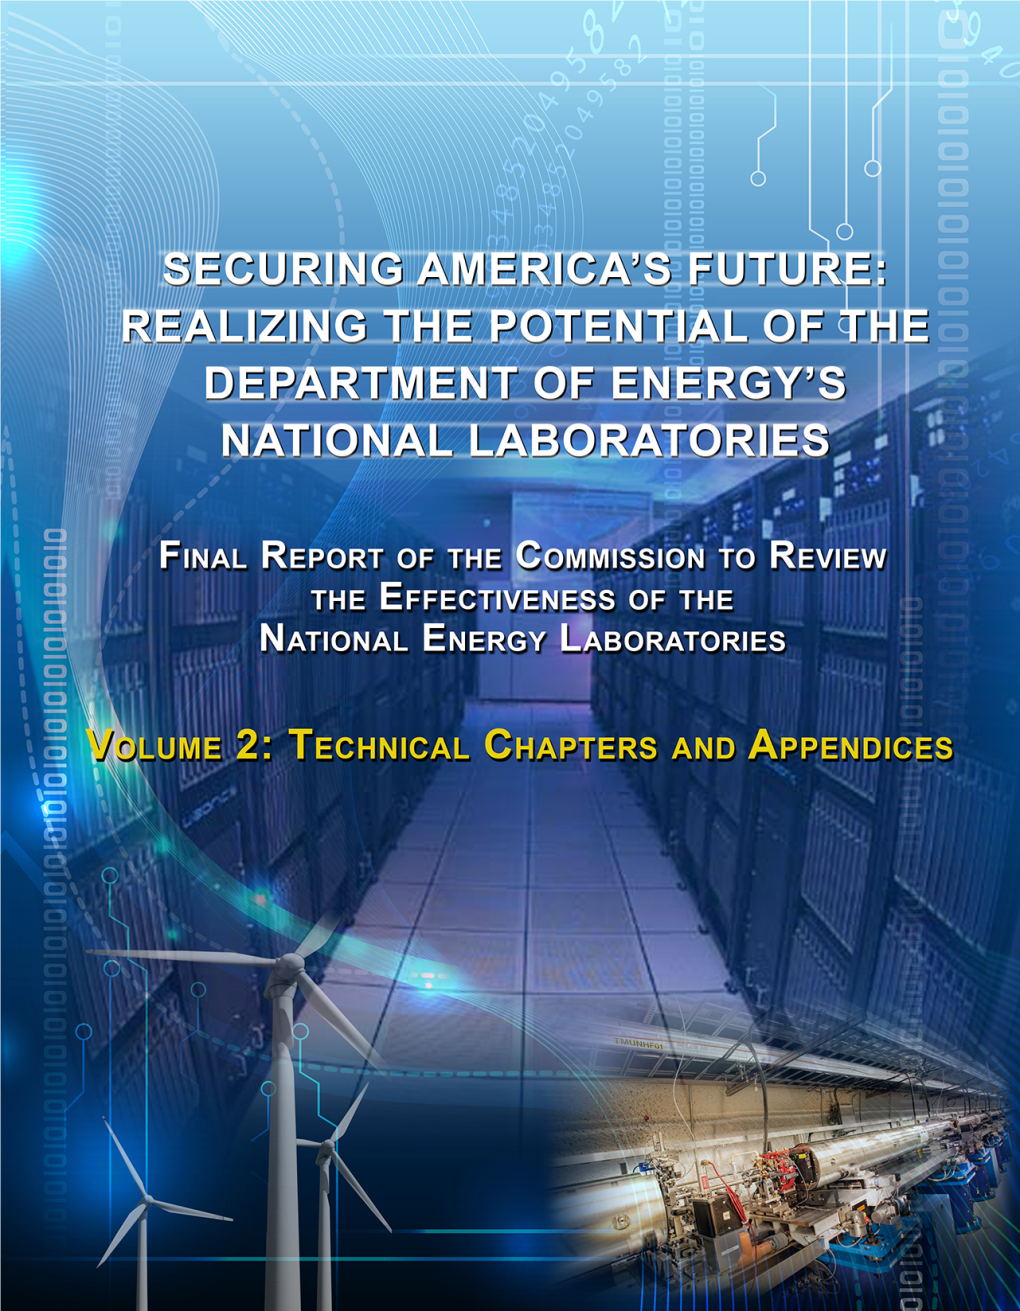 DOE) National Laboratories